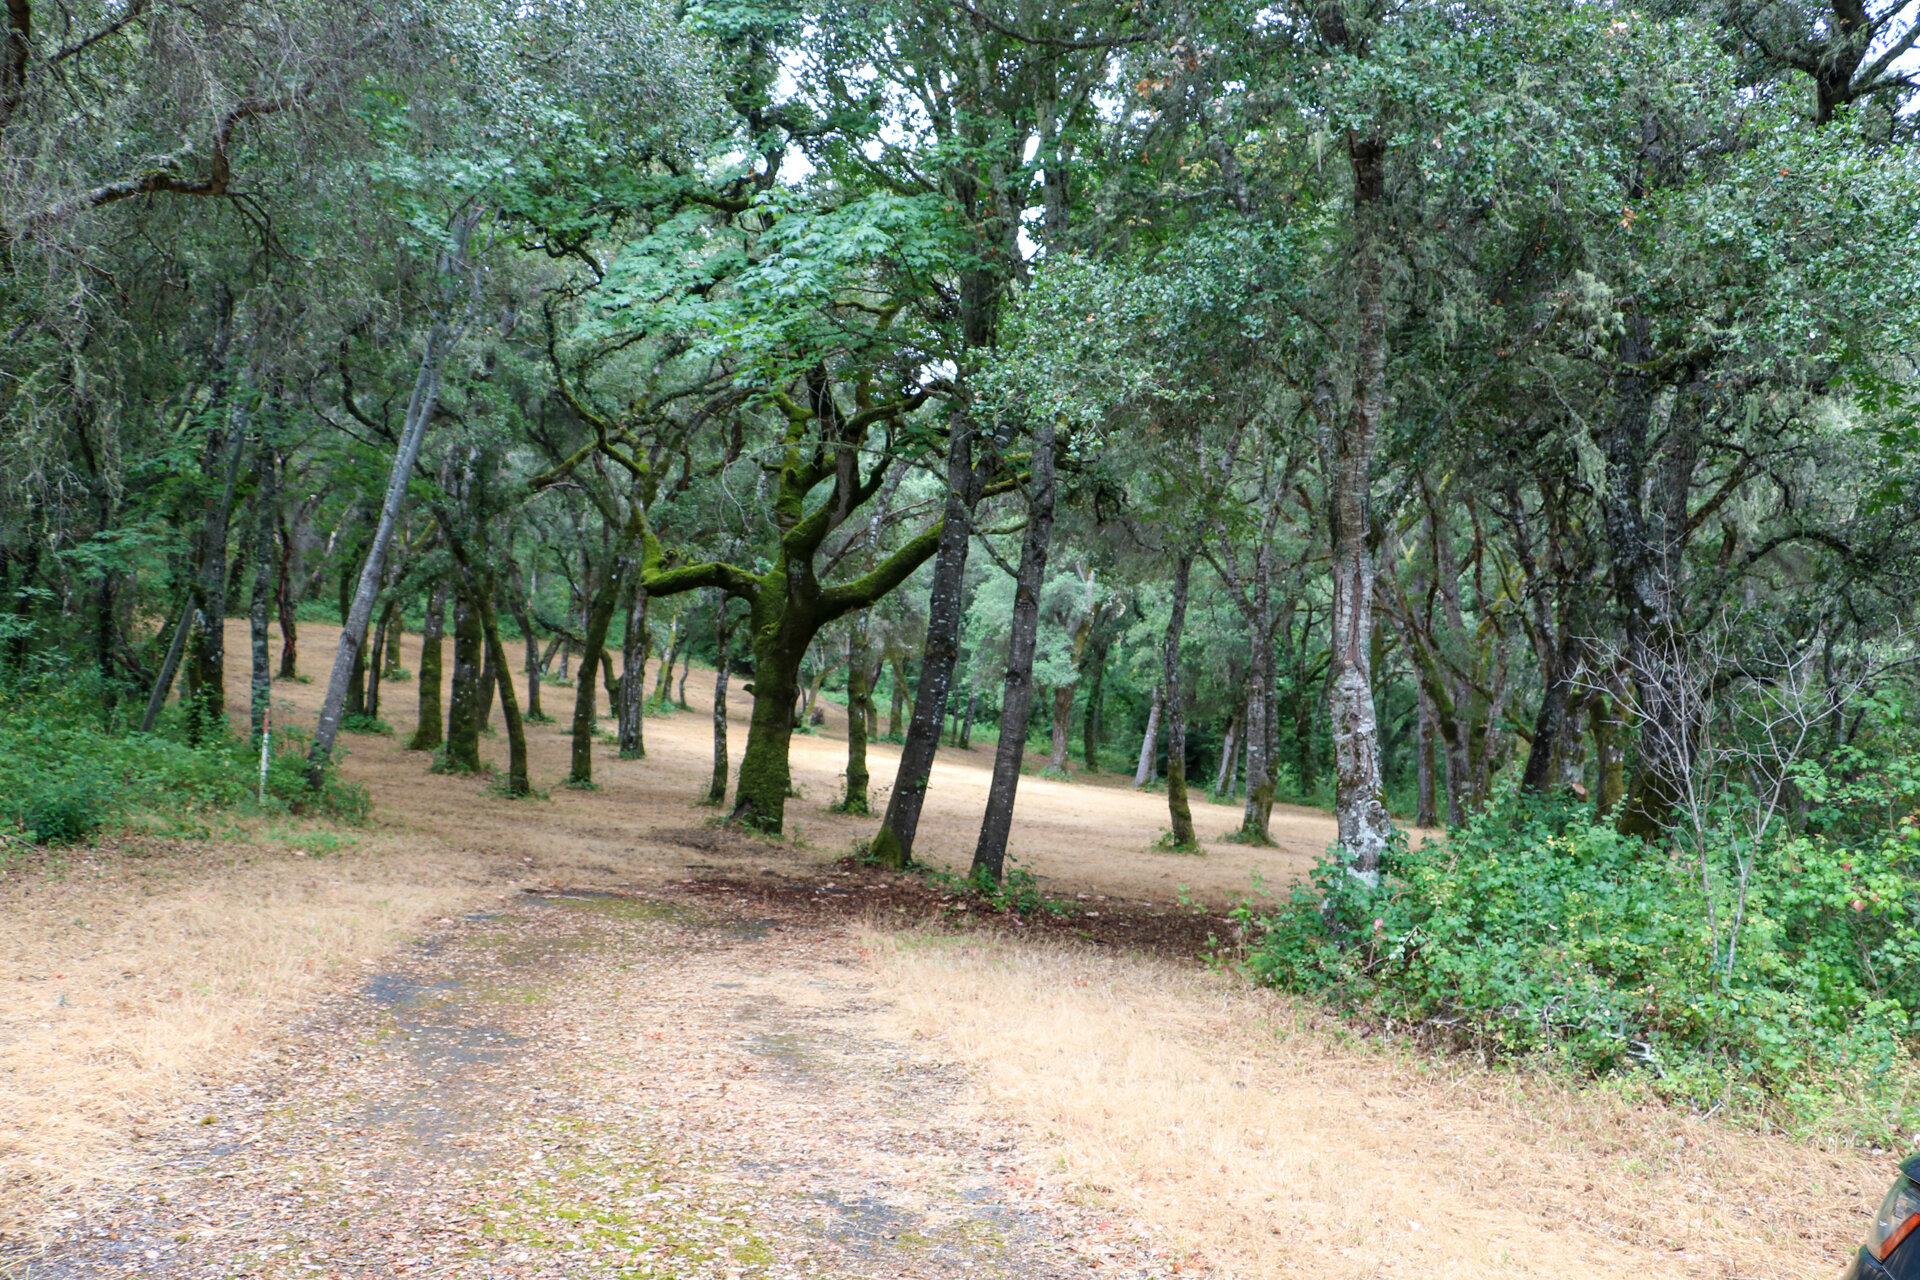  Lot 98 - 14 Arroyo Sequoia at The  Santa Lucia Preserve 